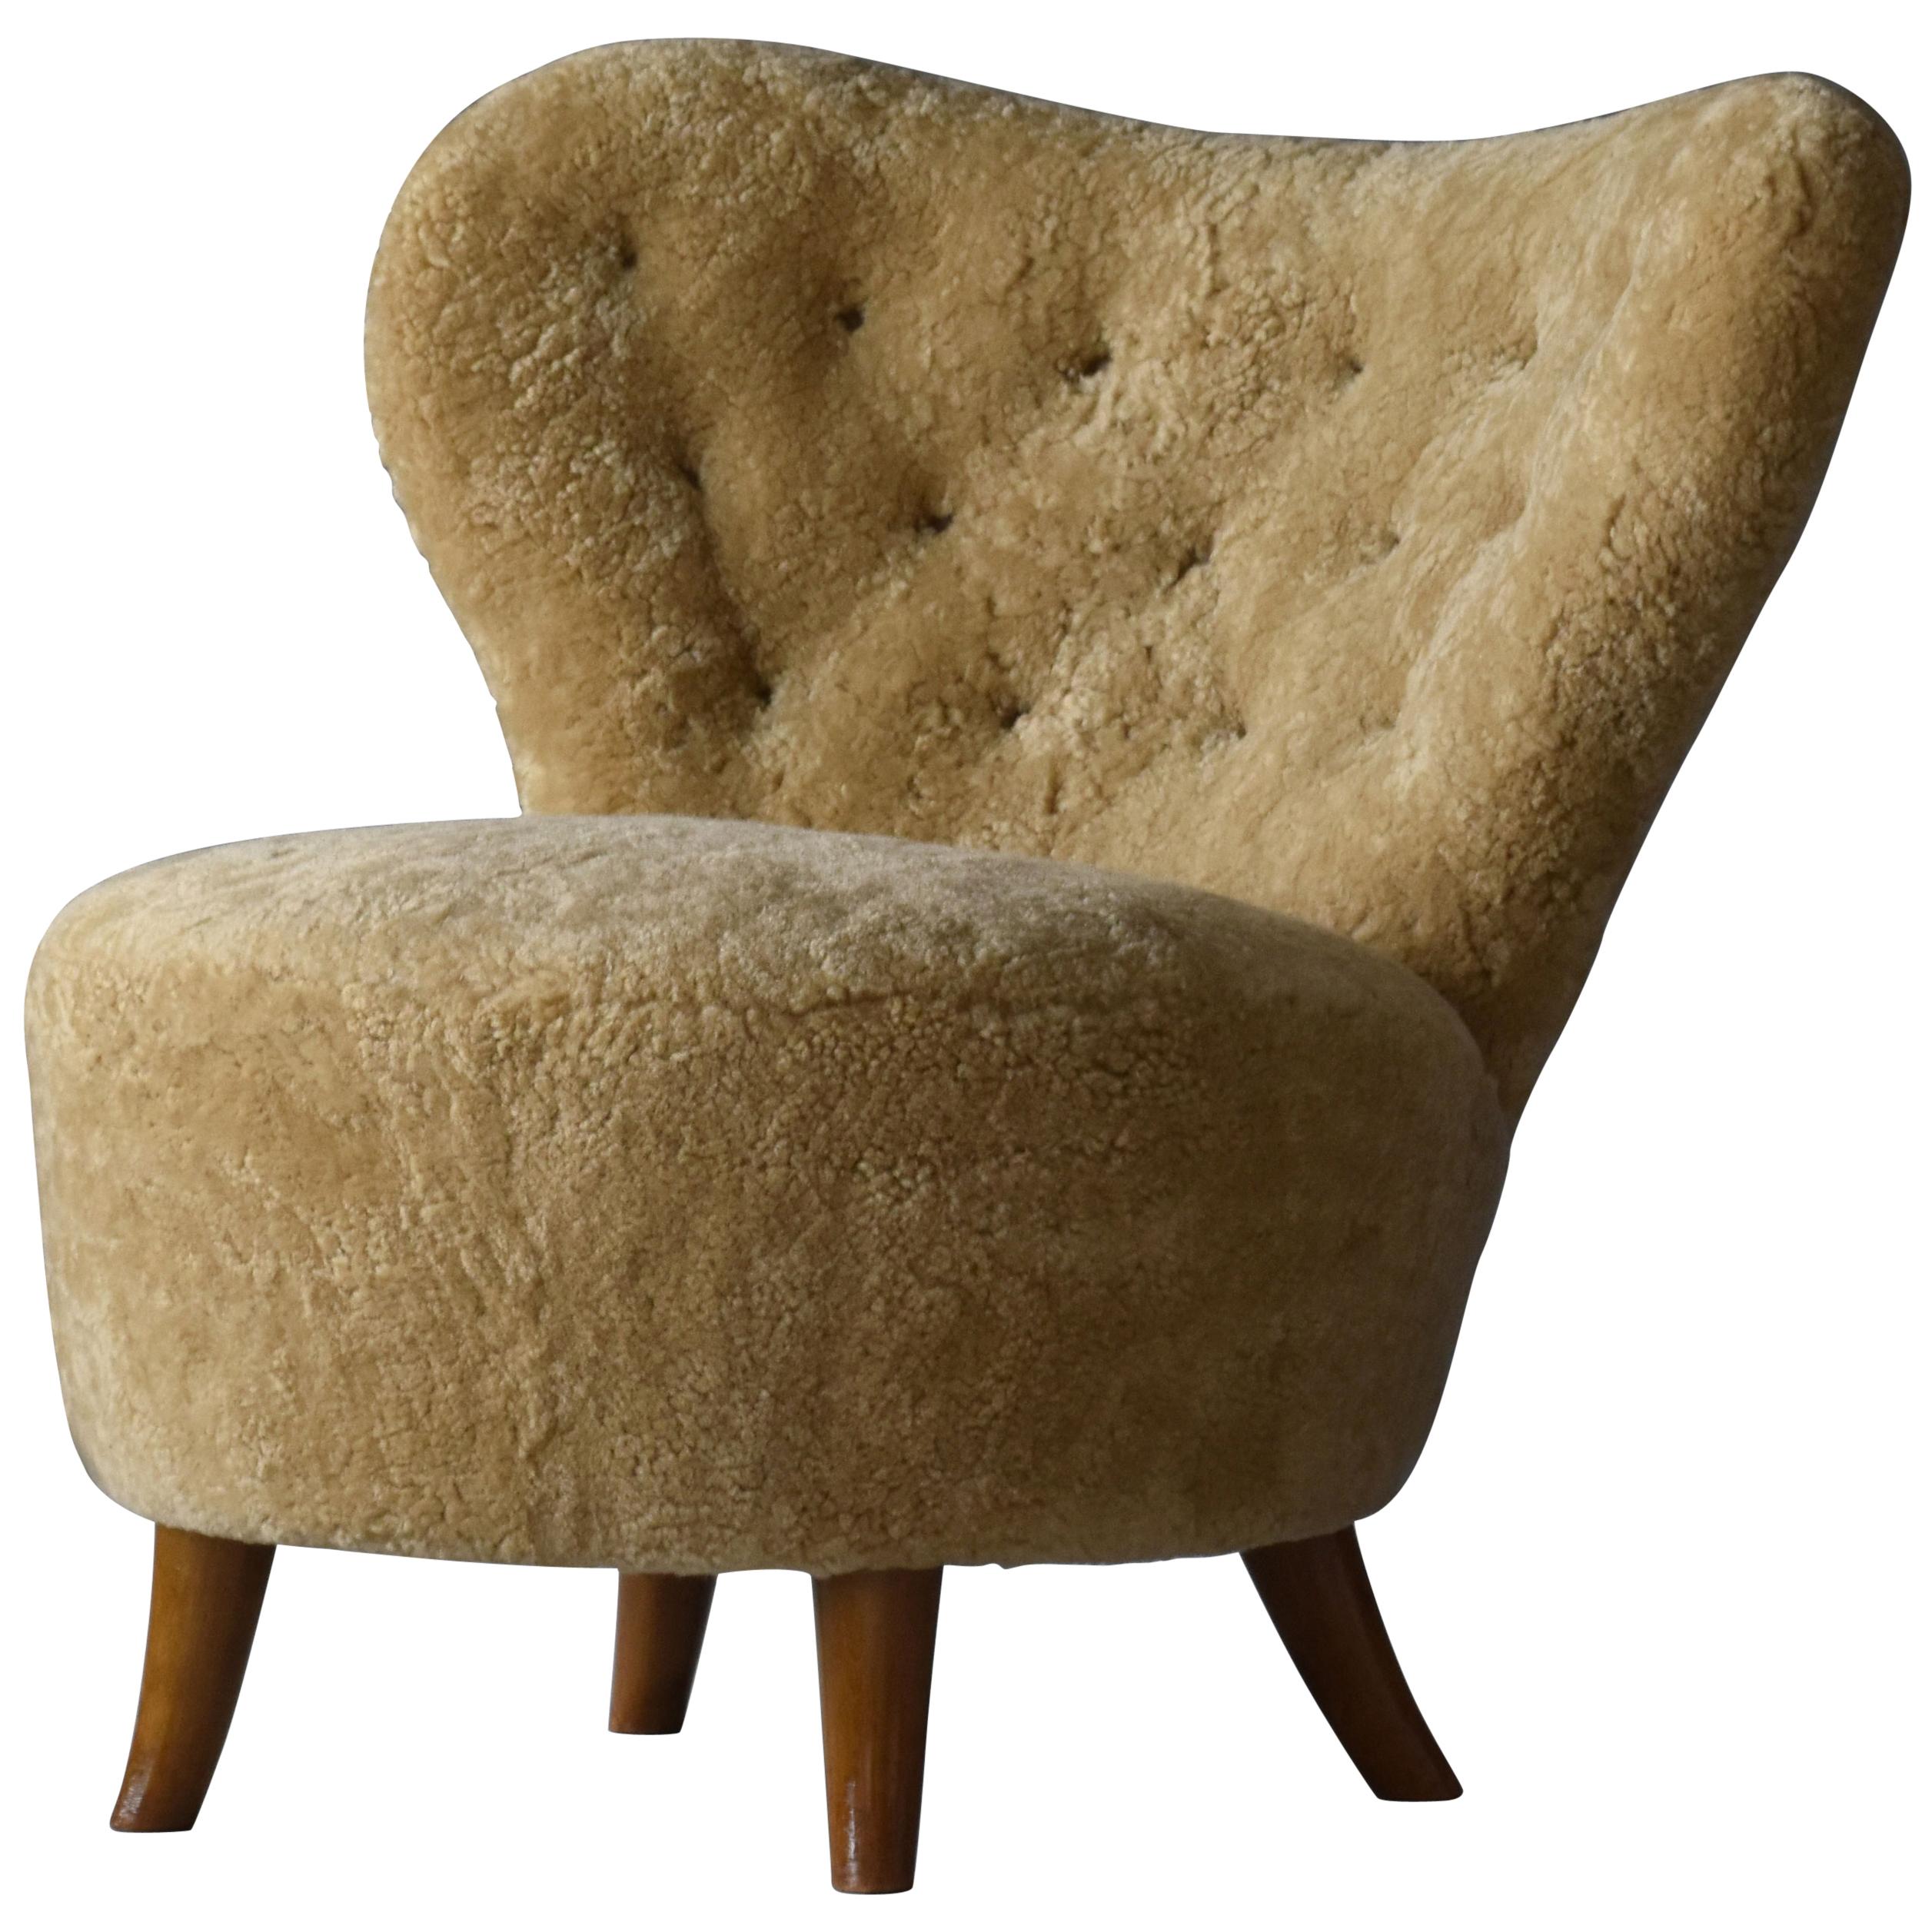 Tor Wolfenstein, Organic Lounge Chair, Sheepskin, Stained Beech, Ditzinger, 1940